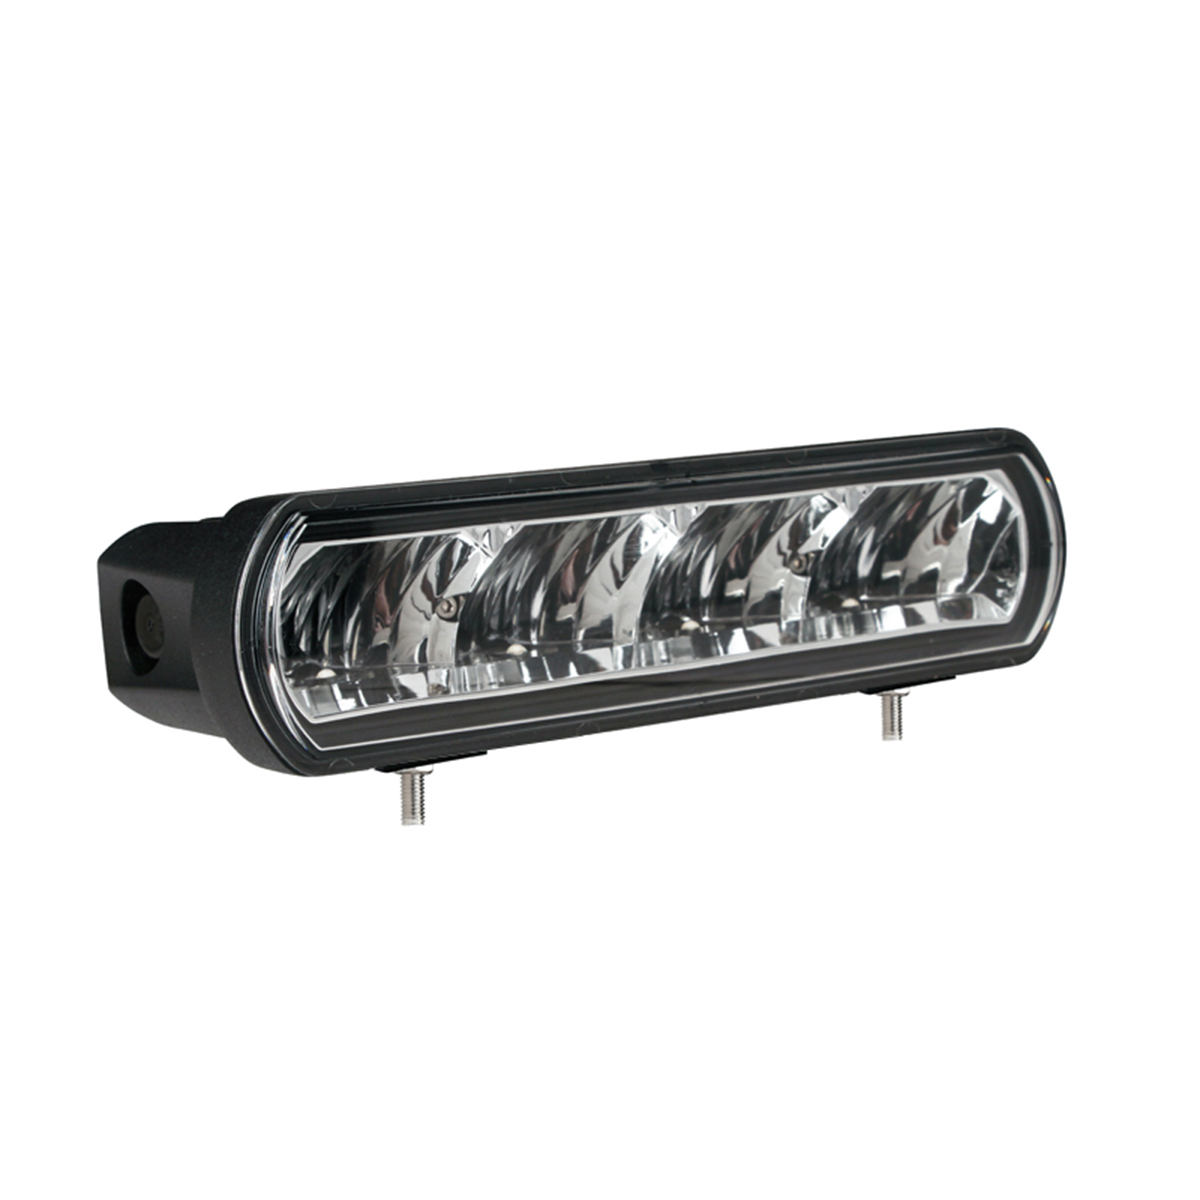 xView 40 LED Fernscheinwerfer - ECE-R112 zertifziert